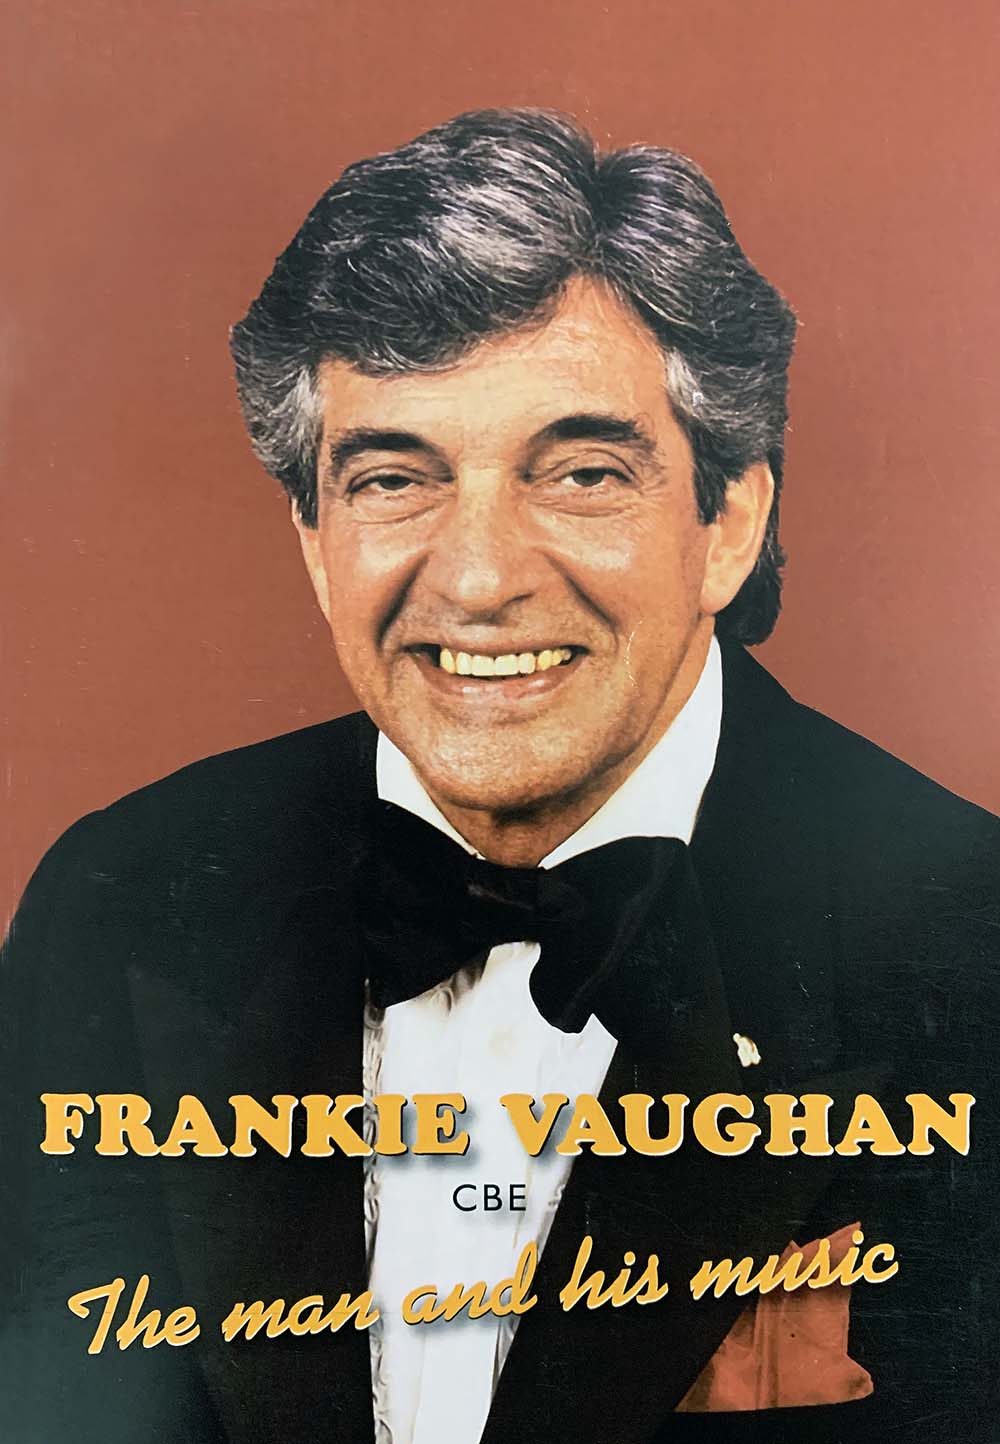 Frankie Vaughan's biography